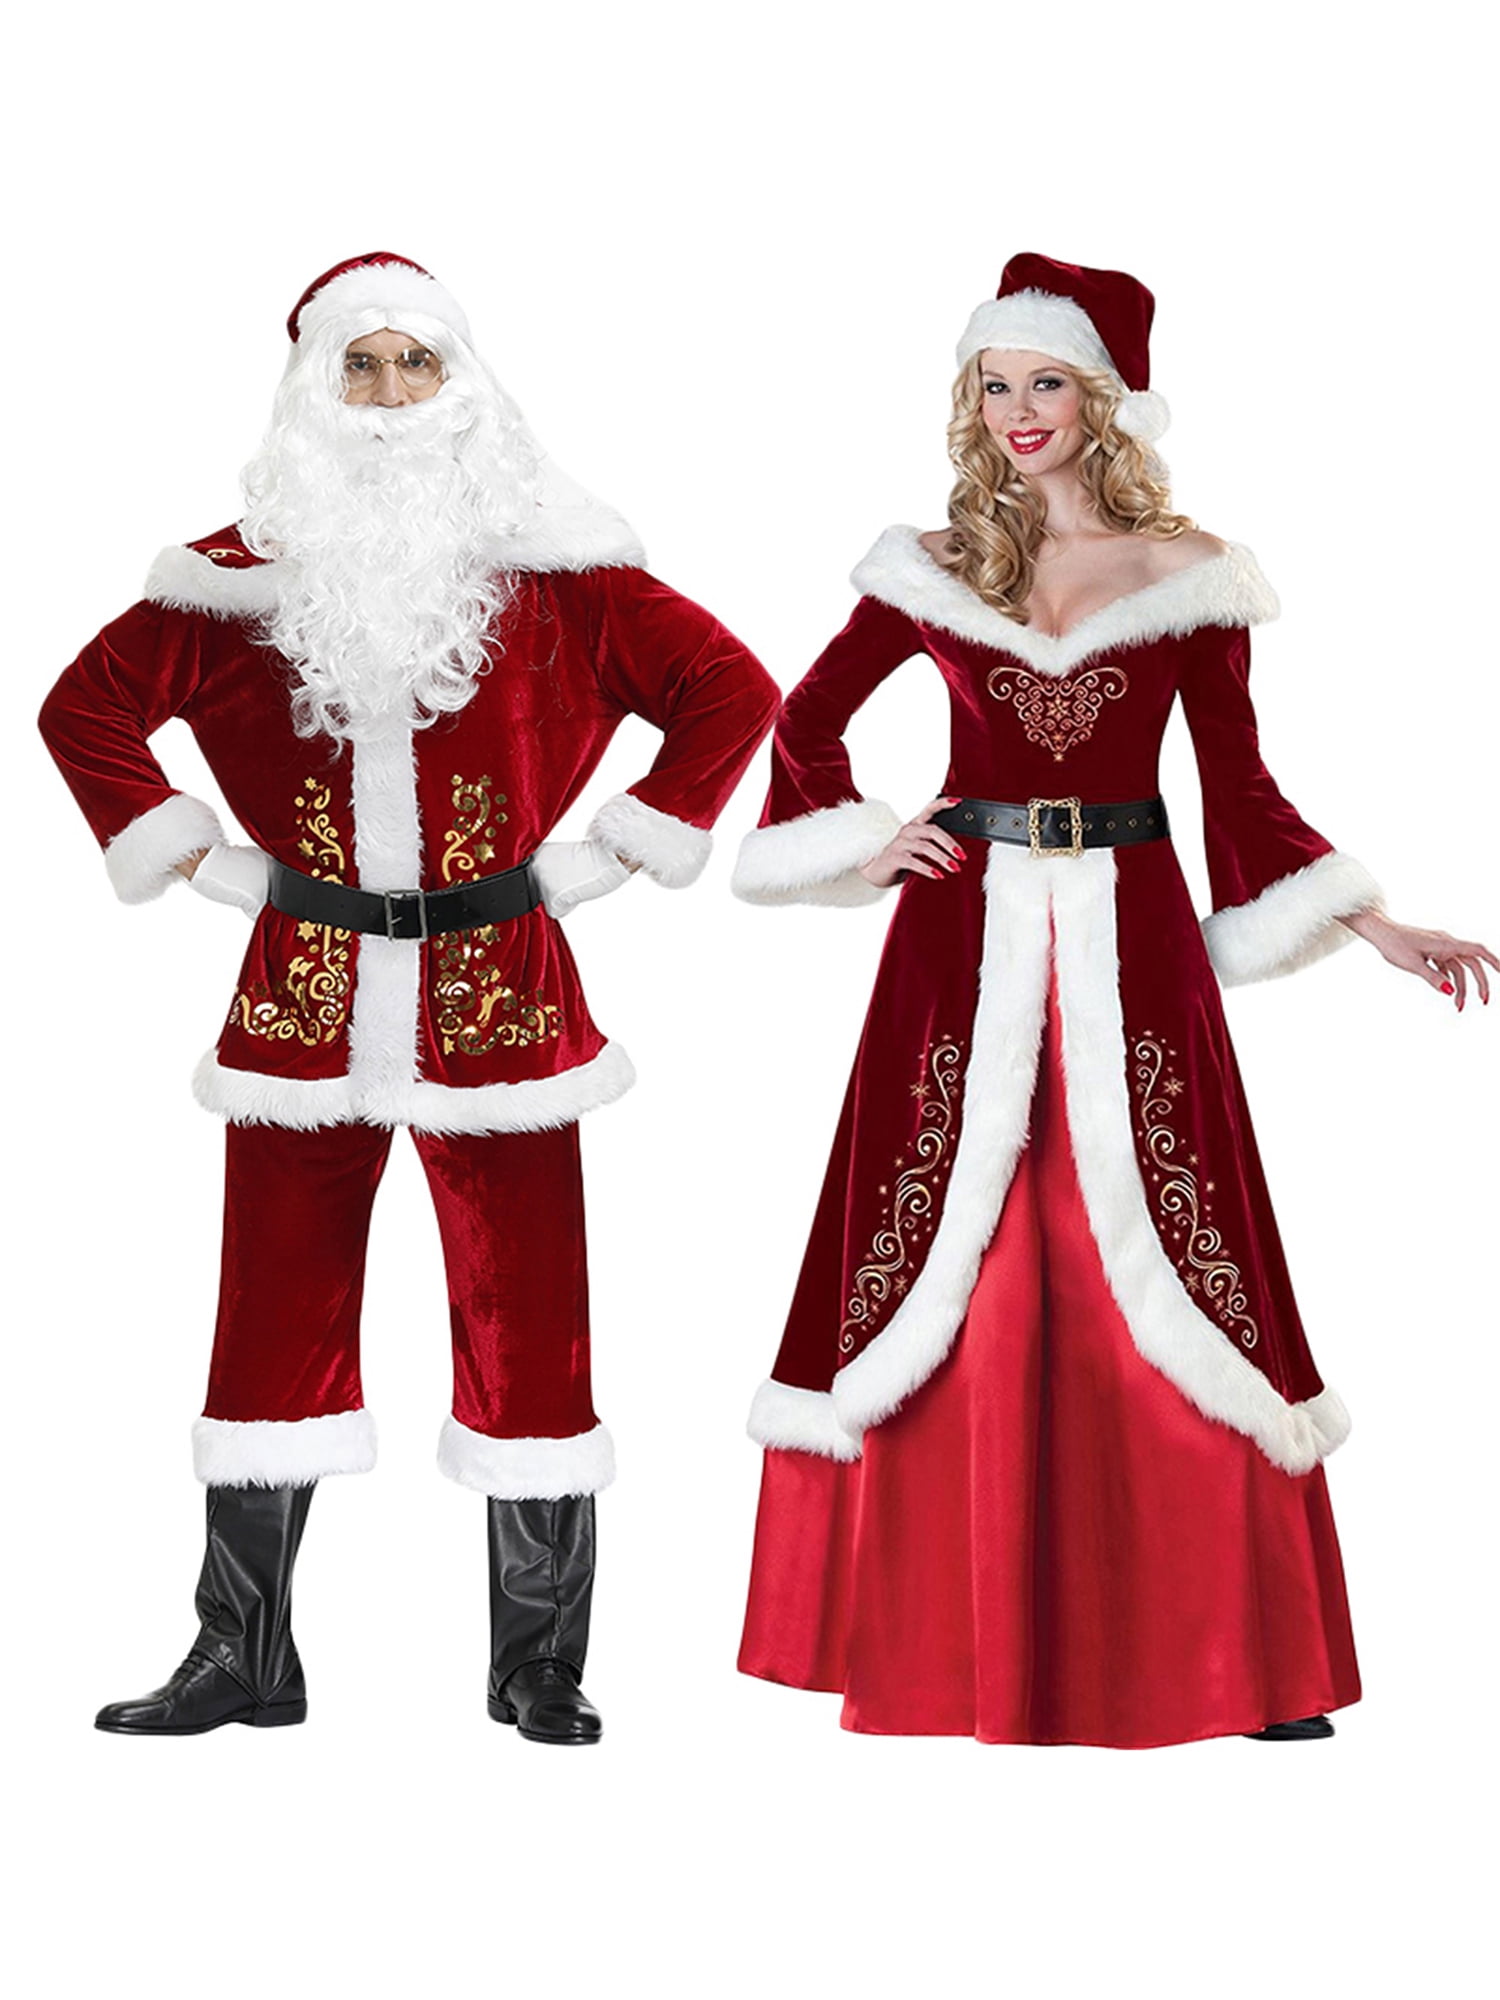 HUIJZG Adult Santa Mrs Claus Costume Christmas Santa Princess Cosplay Outfit  for Men Women Party Cosplay 